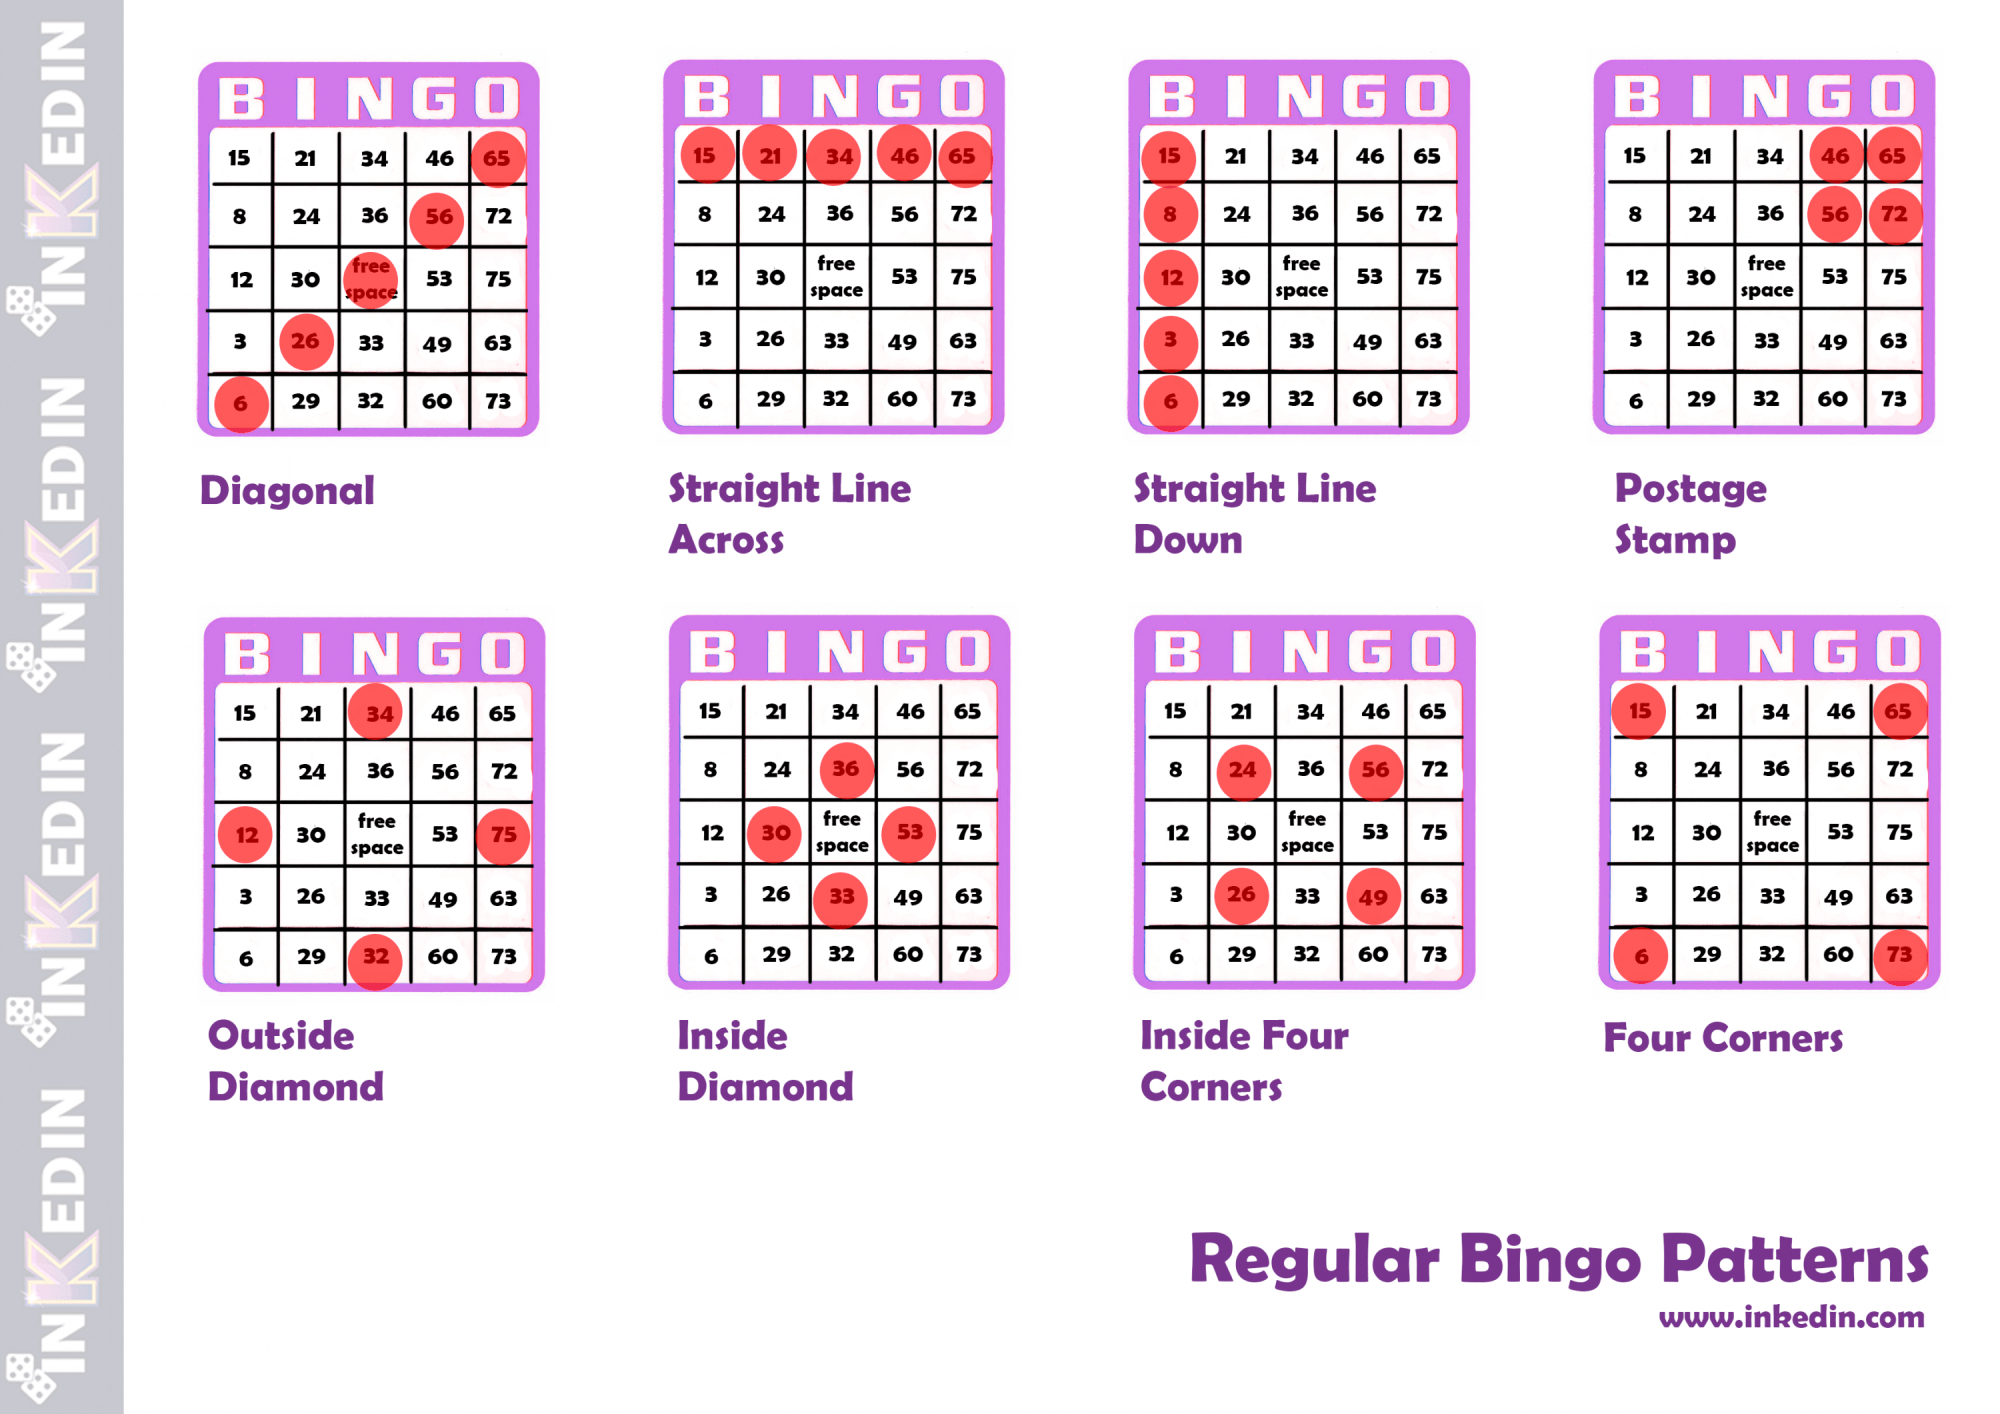 how does casino bingo determine the winner